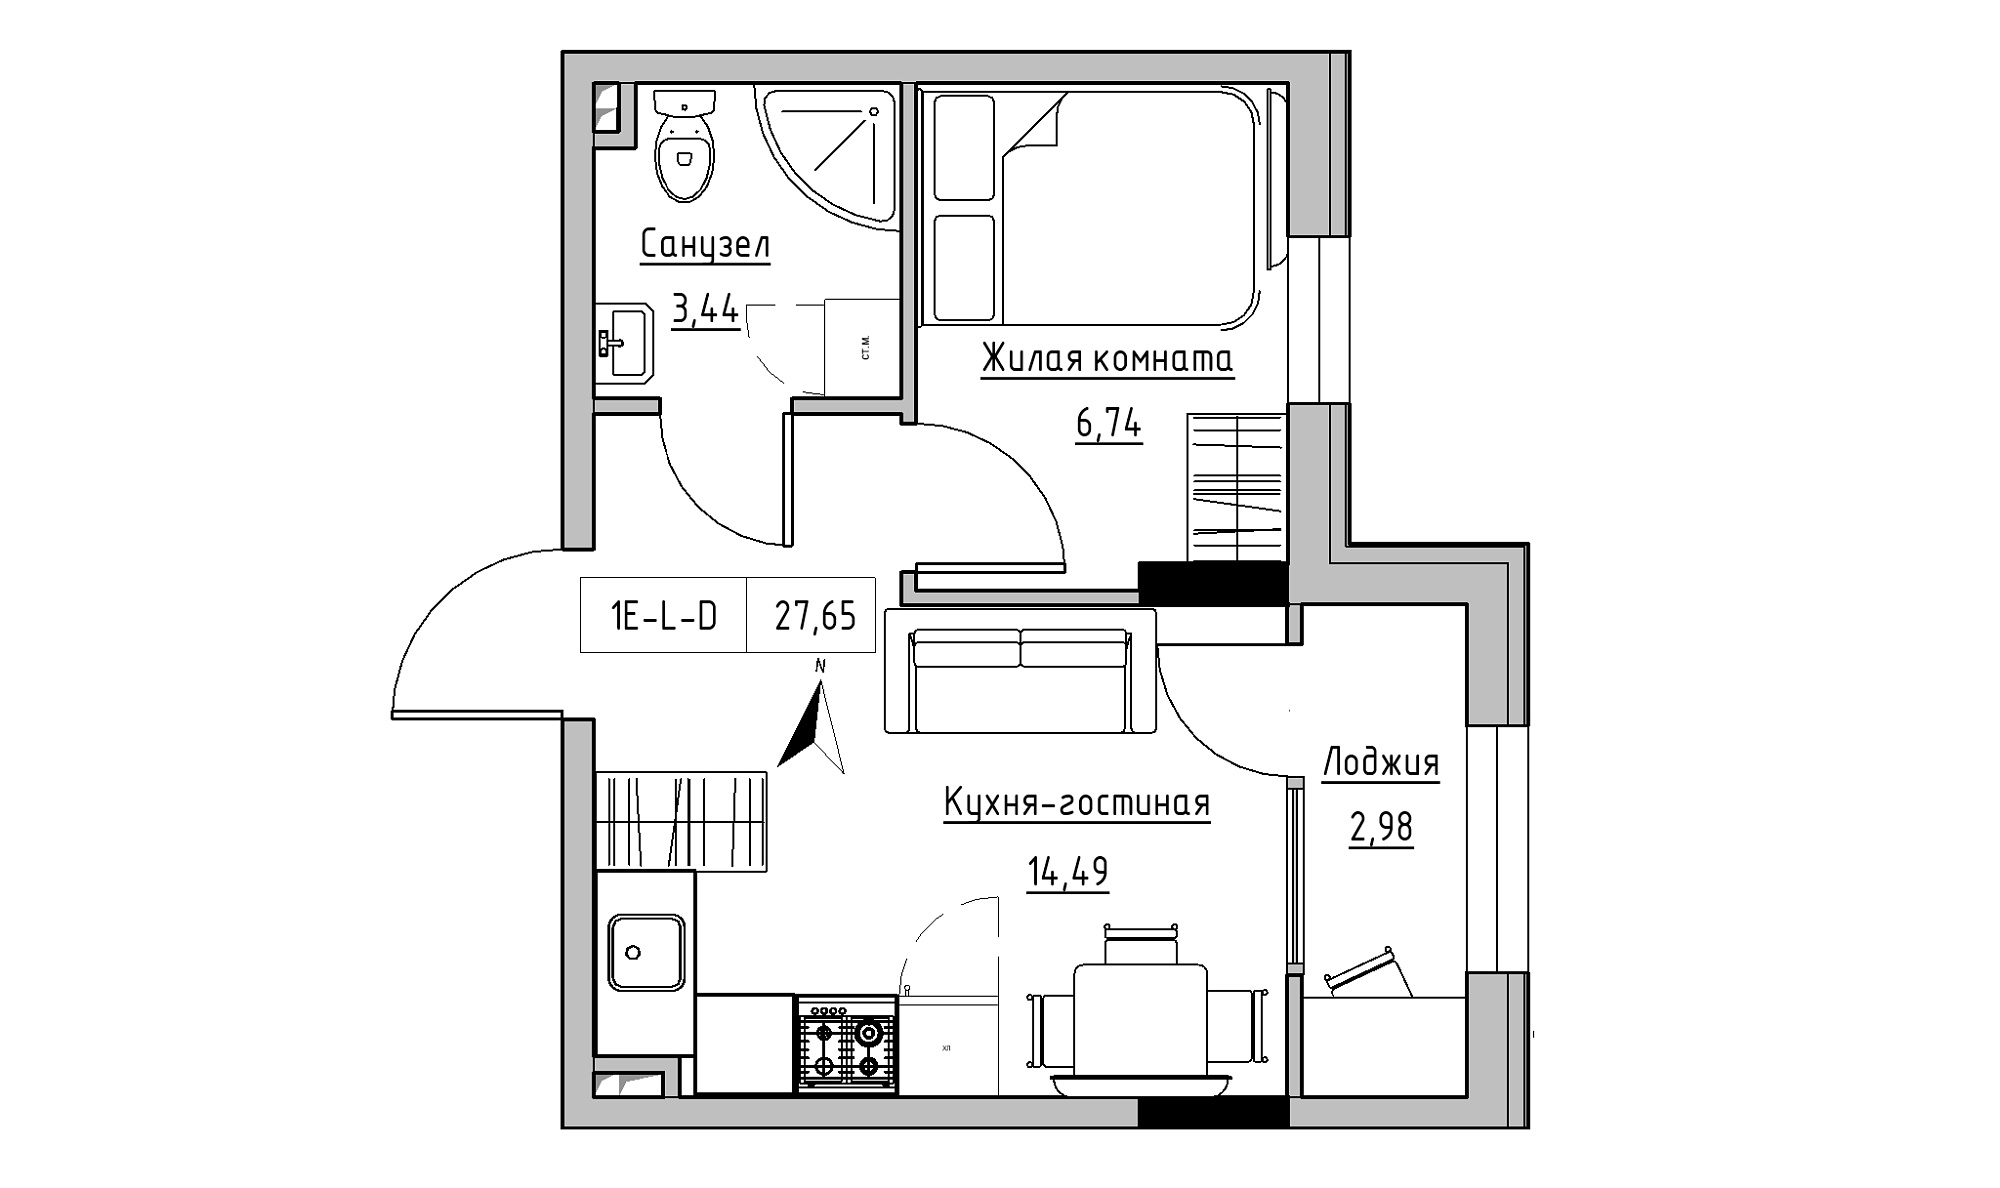 Planning 1-rm flats area 27.65m2, KS-025-01/0001.